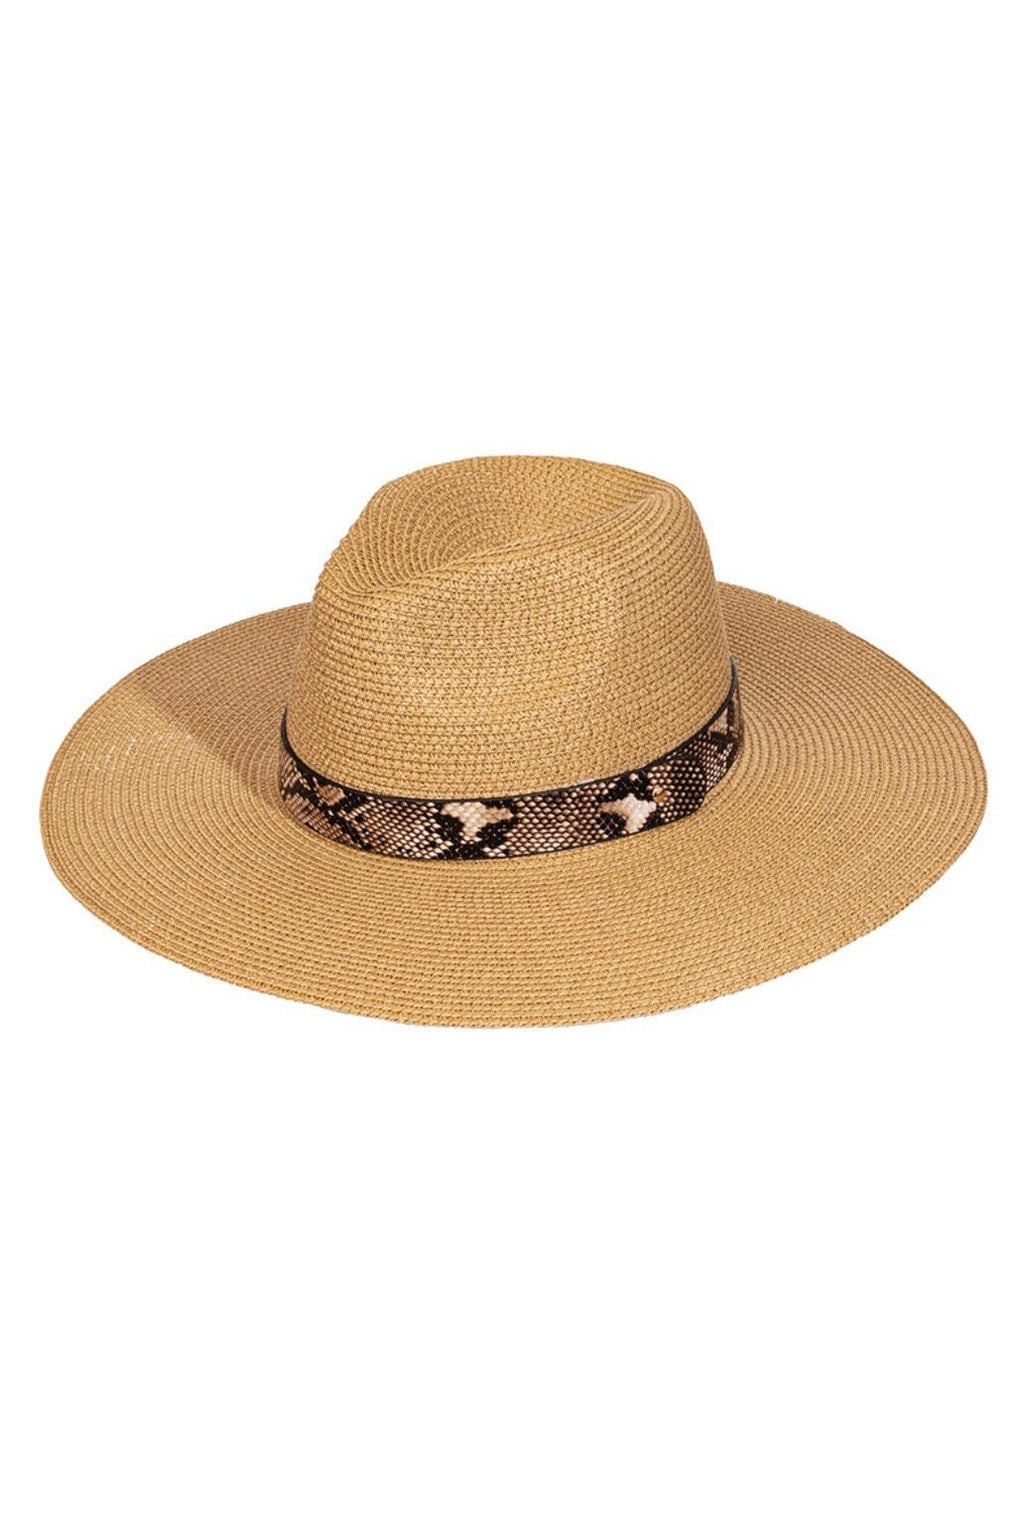 Izzy Snakeskin Banded Sun Hat - Tan - Pineapple Lain Boutique